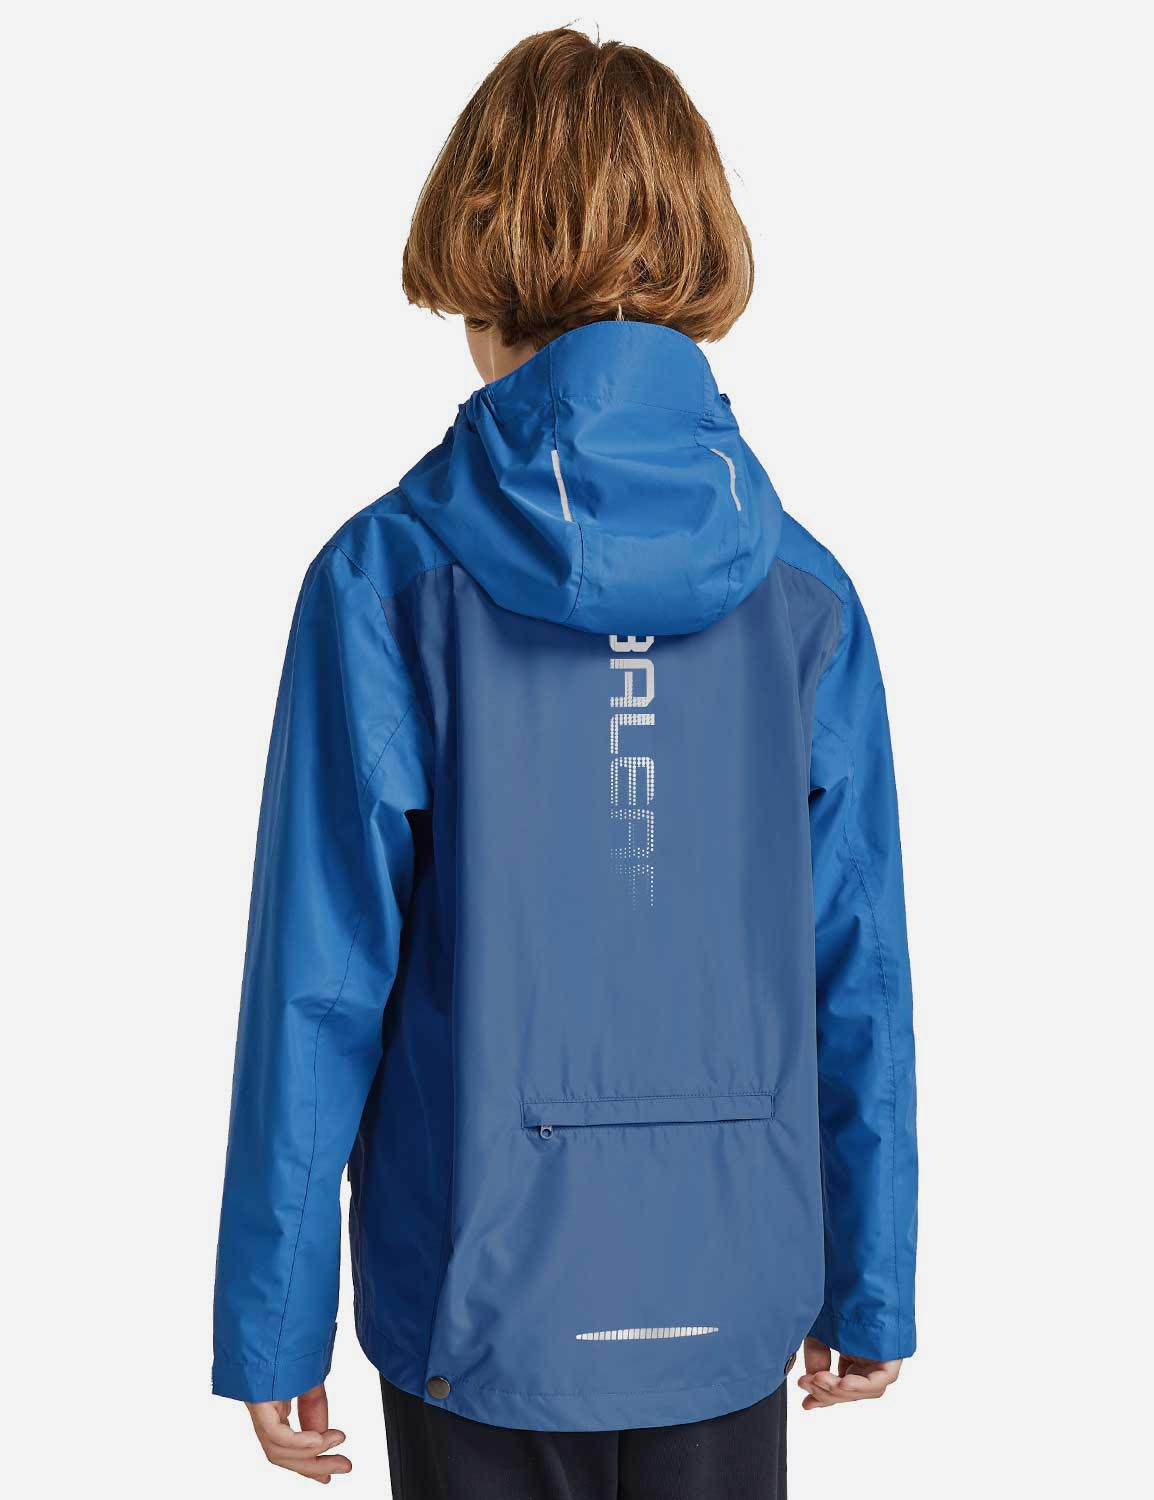 Baleaf Kid's Waterproof Outdoor Hooded Cycling Rain Jacket cai037 Navy/Blue Back